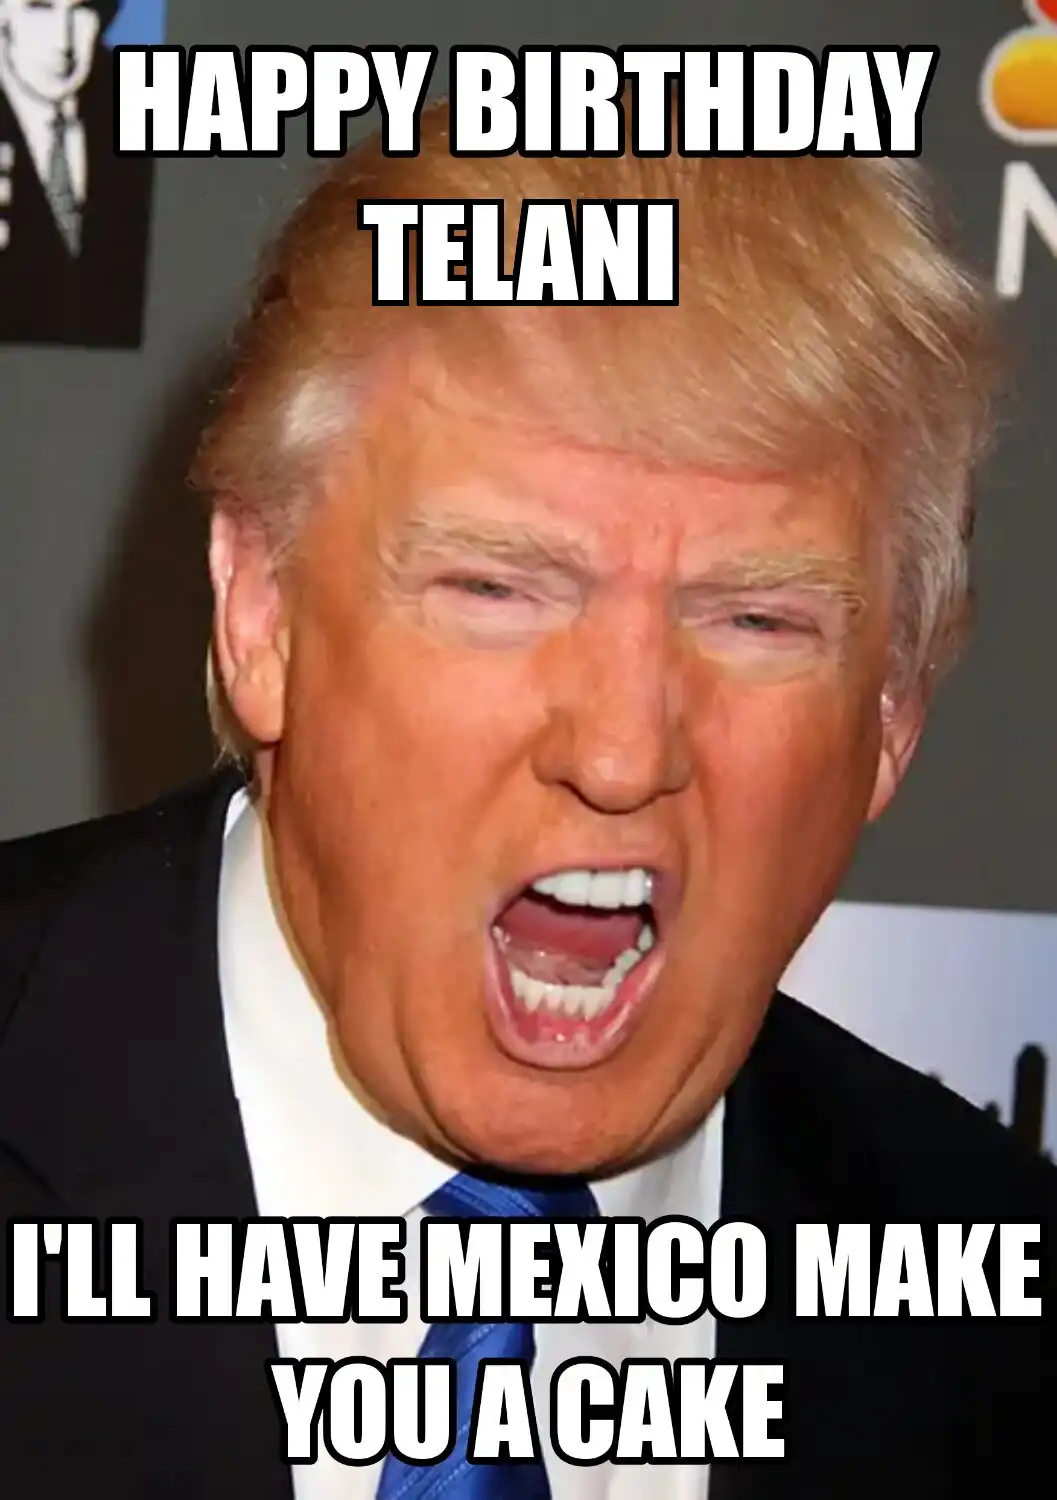 Happy Birthday Telani Mexico Make You A Cake Meme